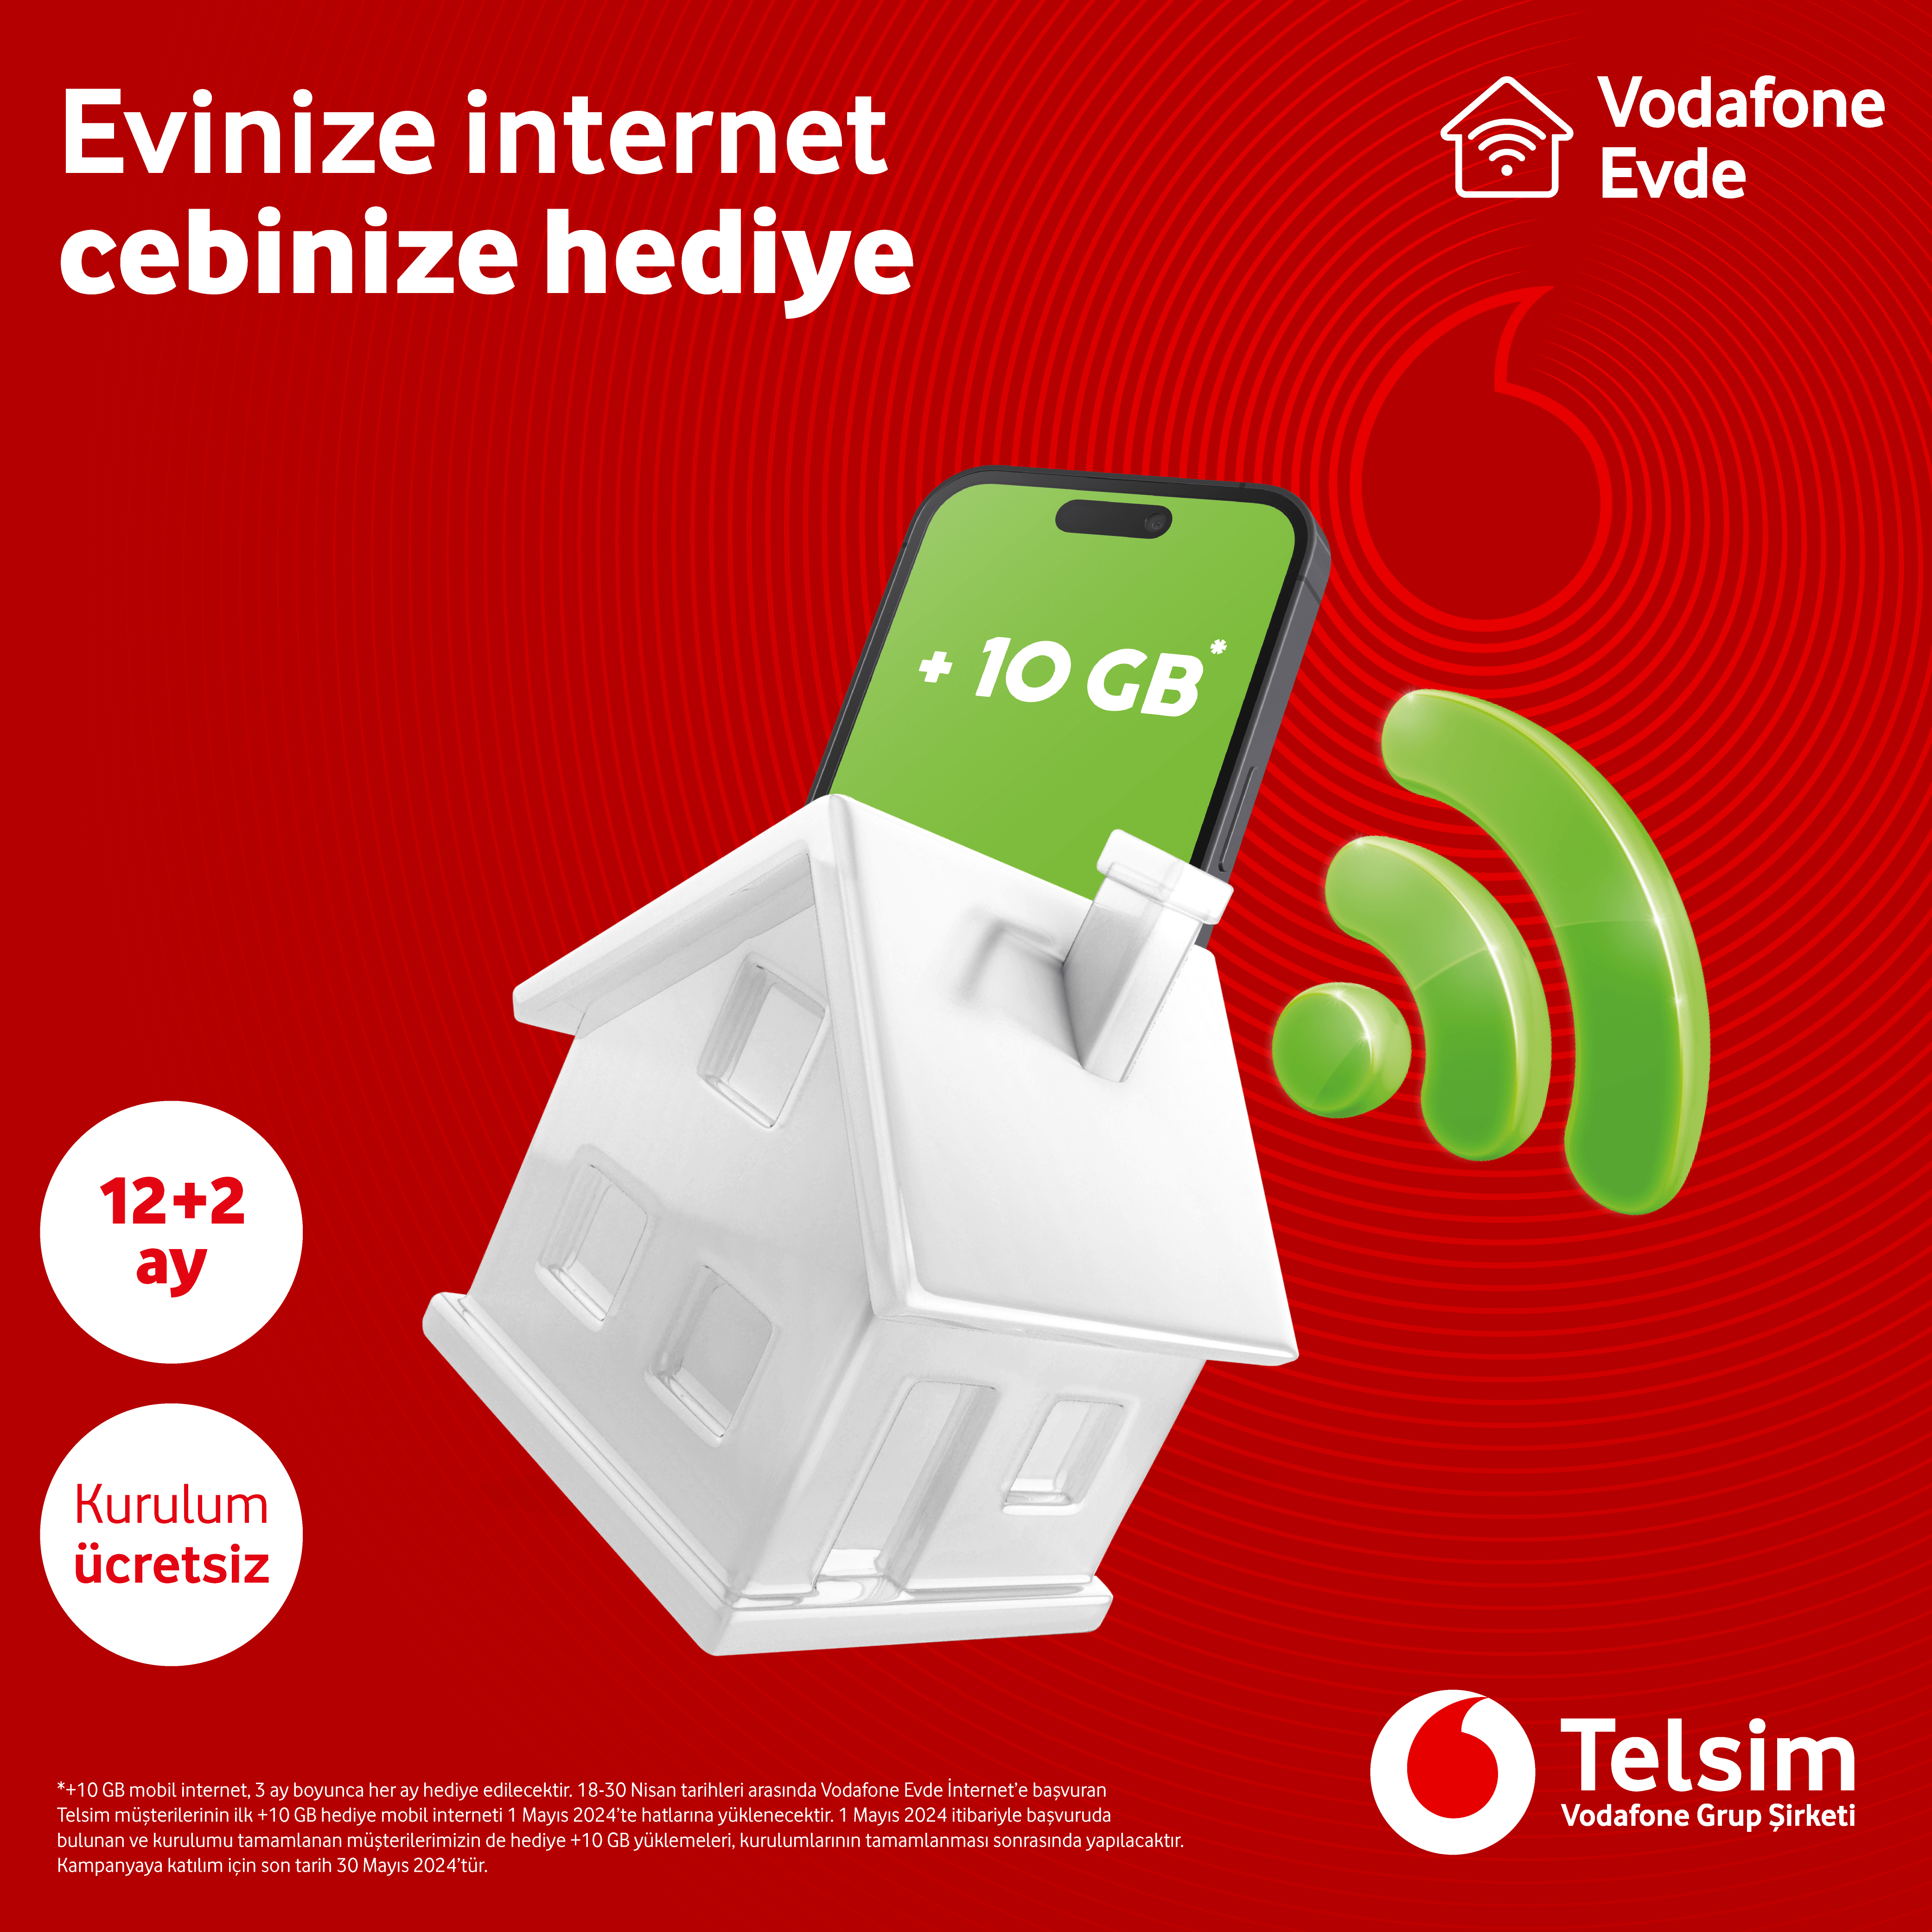 Vodafone Evde Tarifeye 3 Ay 10 GB Data Kampanya